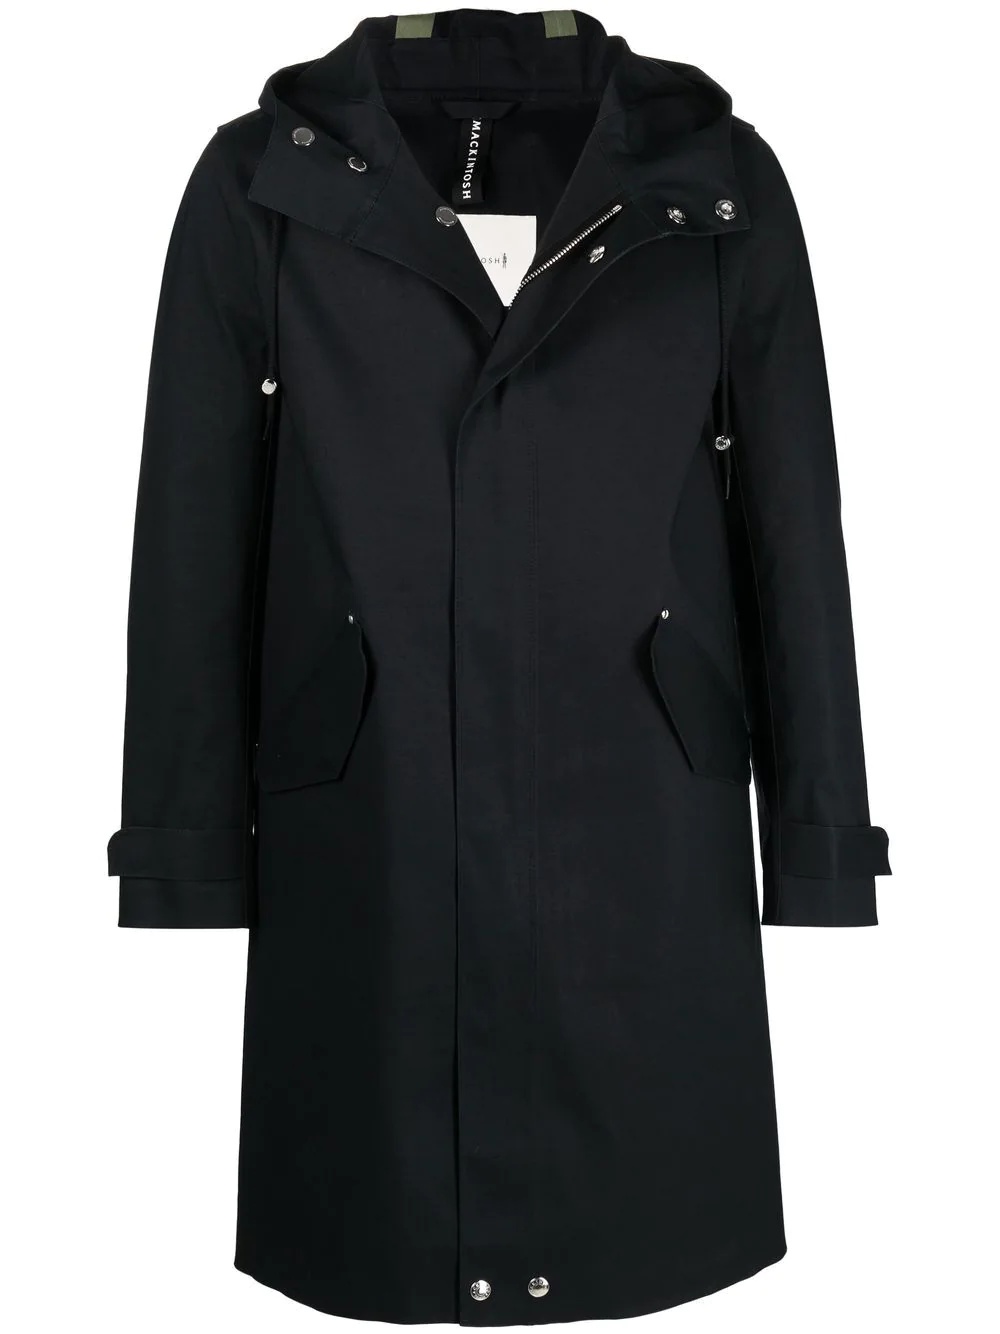 GRANISH Black Bonded Cotton Hooded Coat - 1